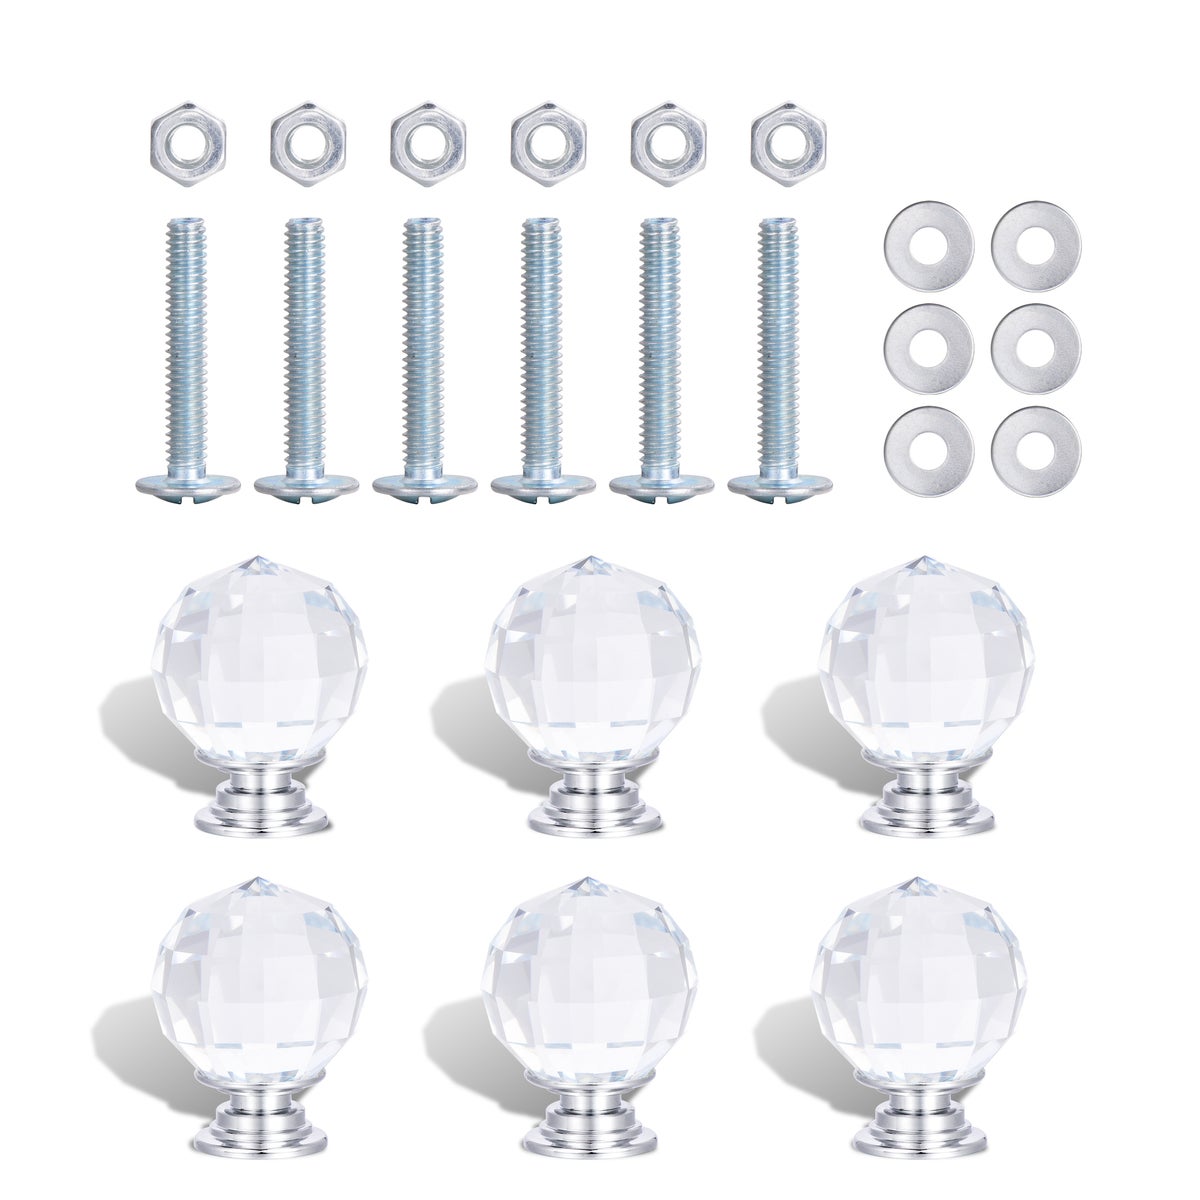 6PC - 30MM Classic Crystal Glass Knob Pull Handles (12 Set)